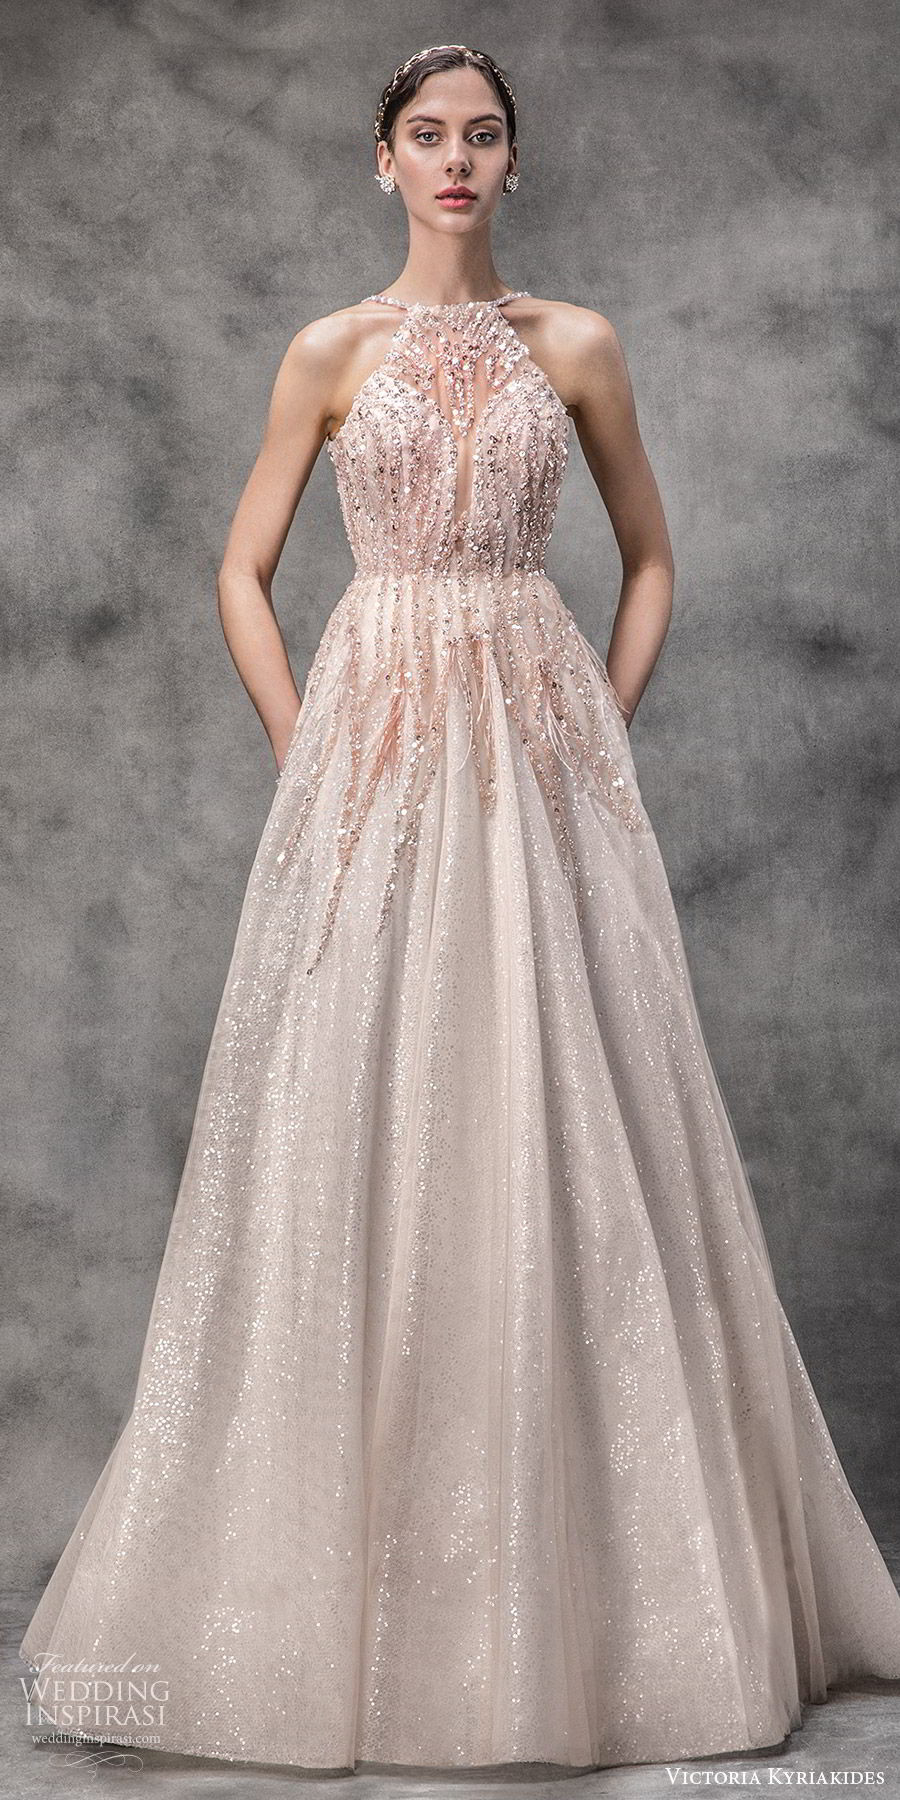 Blush Wedding Gowns 2020
 Victoria Kyriakides Spring 2020 Wedding Dresses